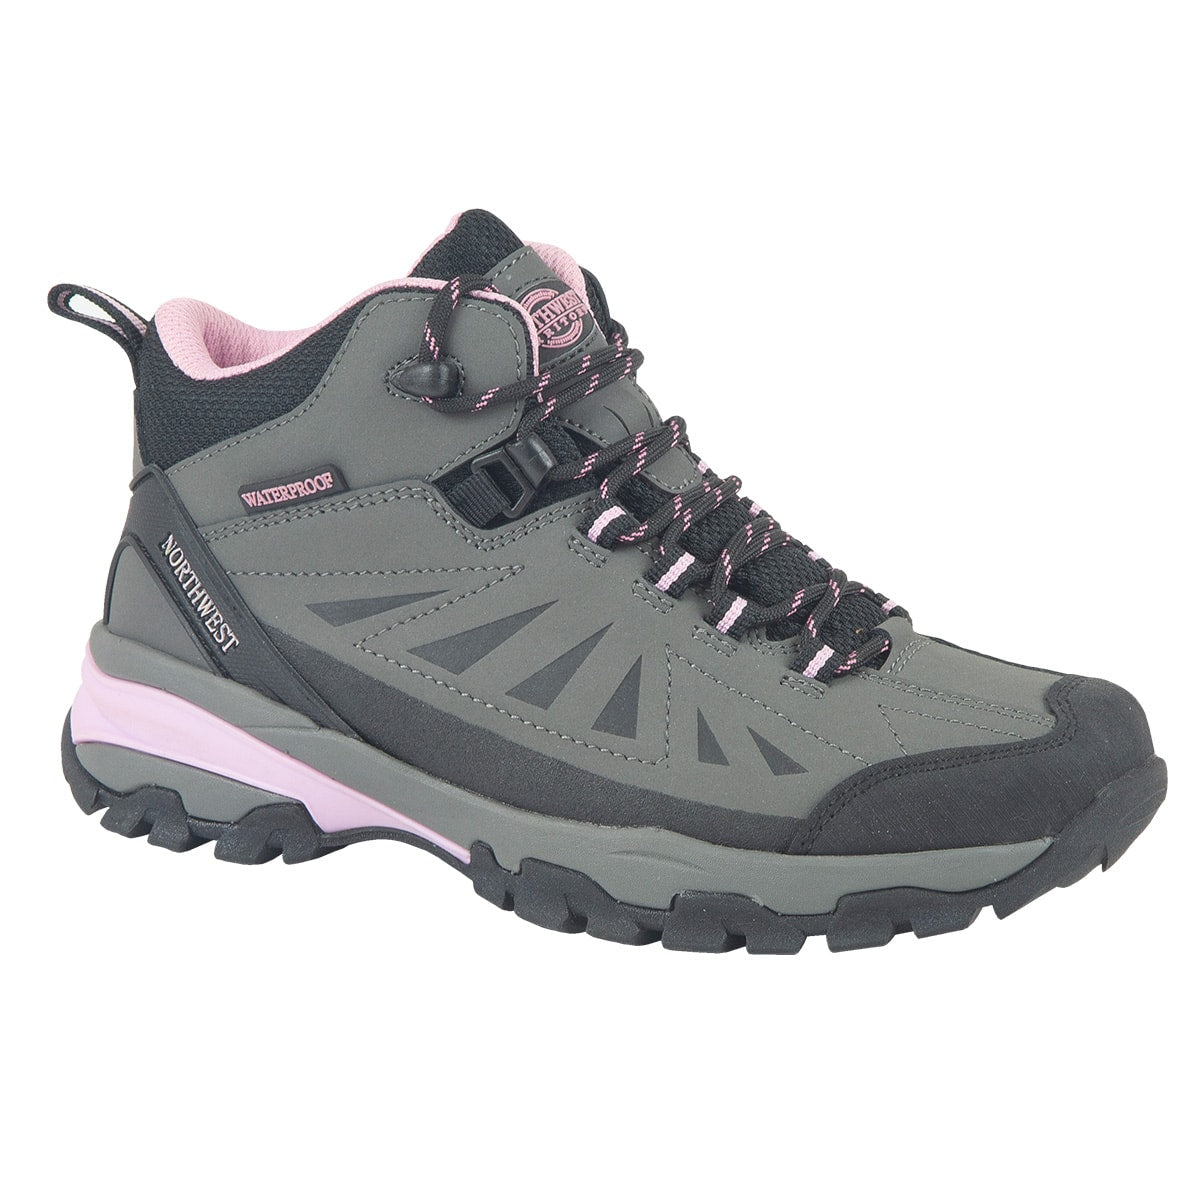 Keele HI Waterproof Walking And Hiking Boots